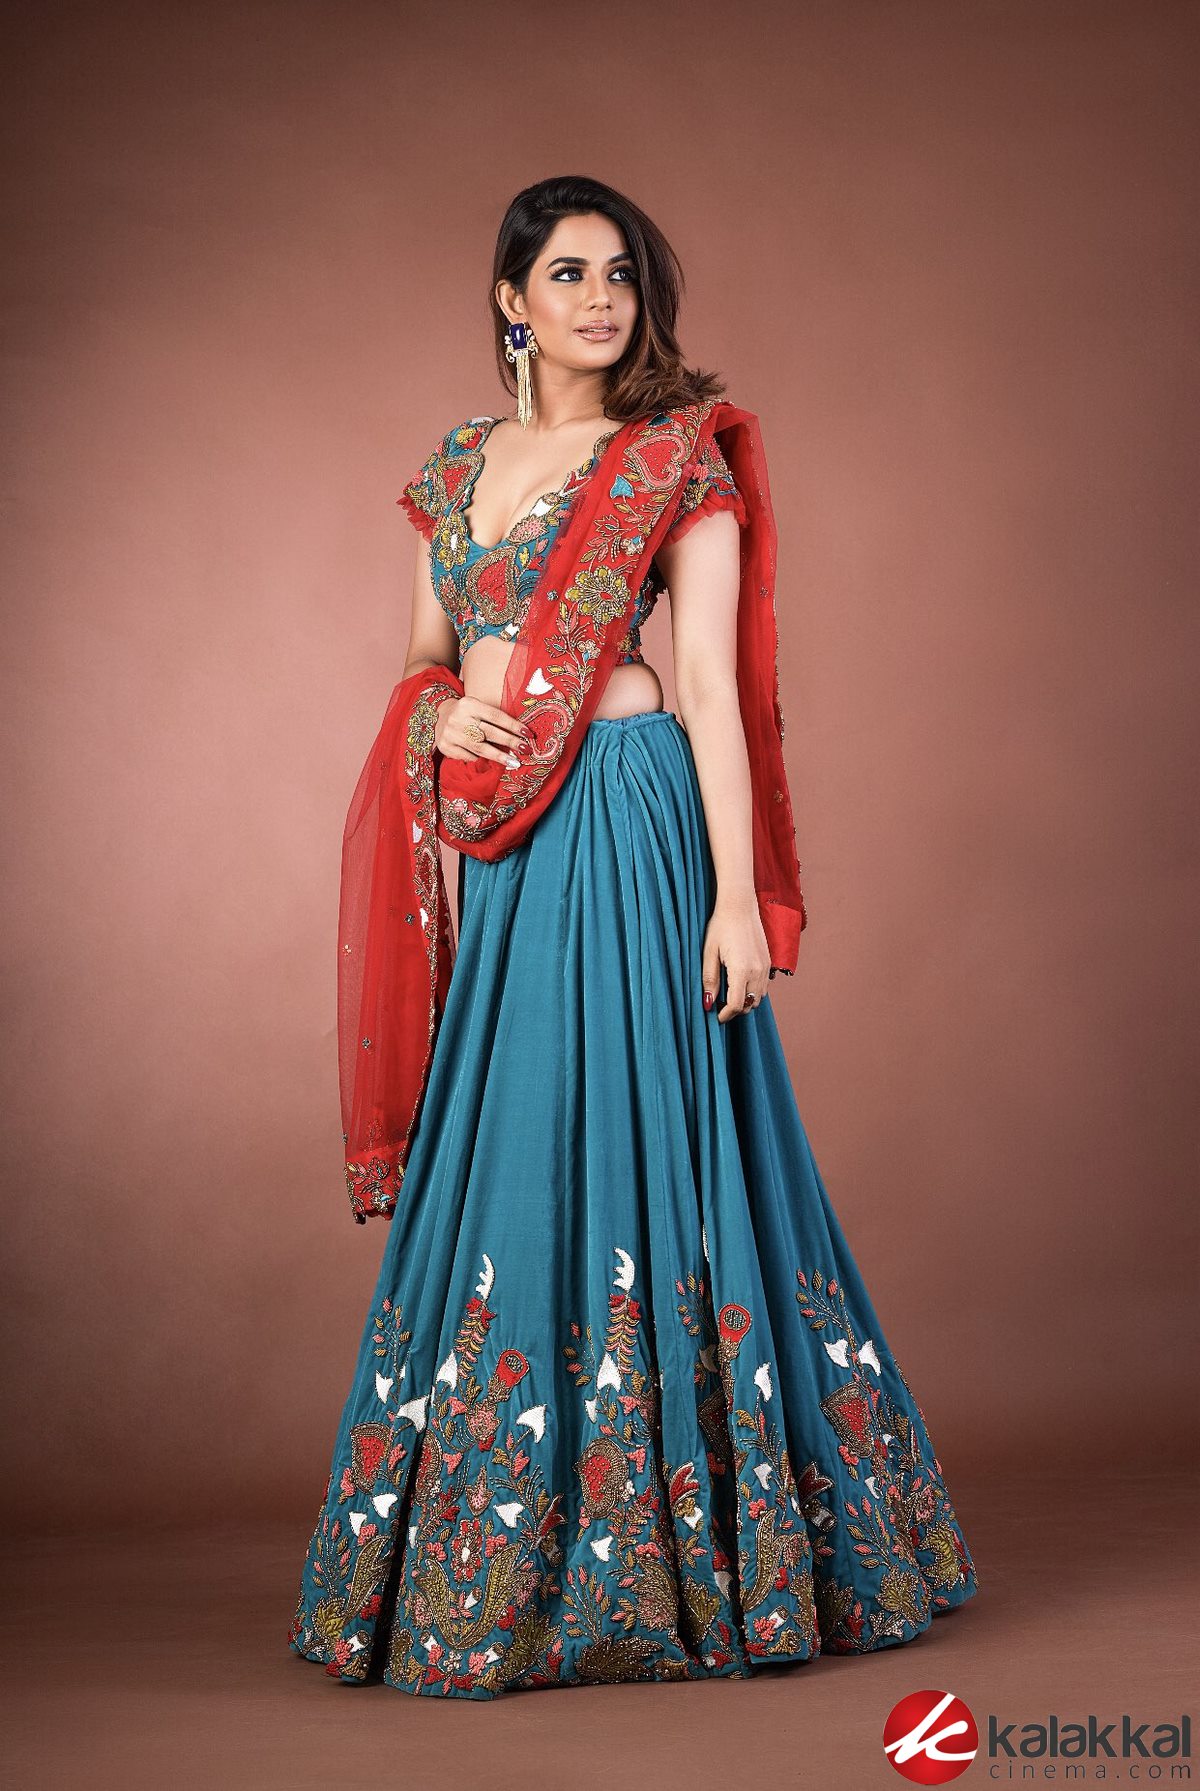 Beauty Queen Aishwarya Dutta Latest Photos